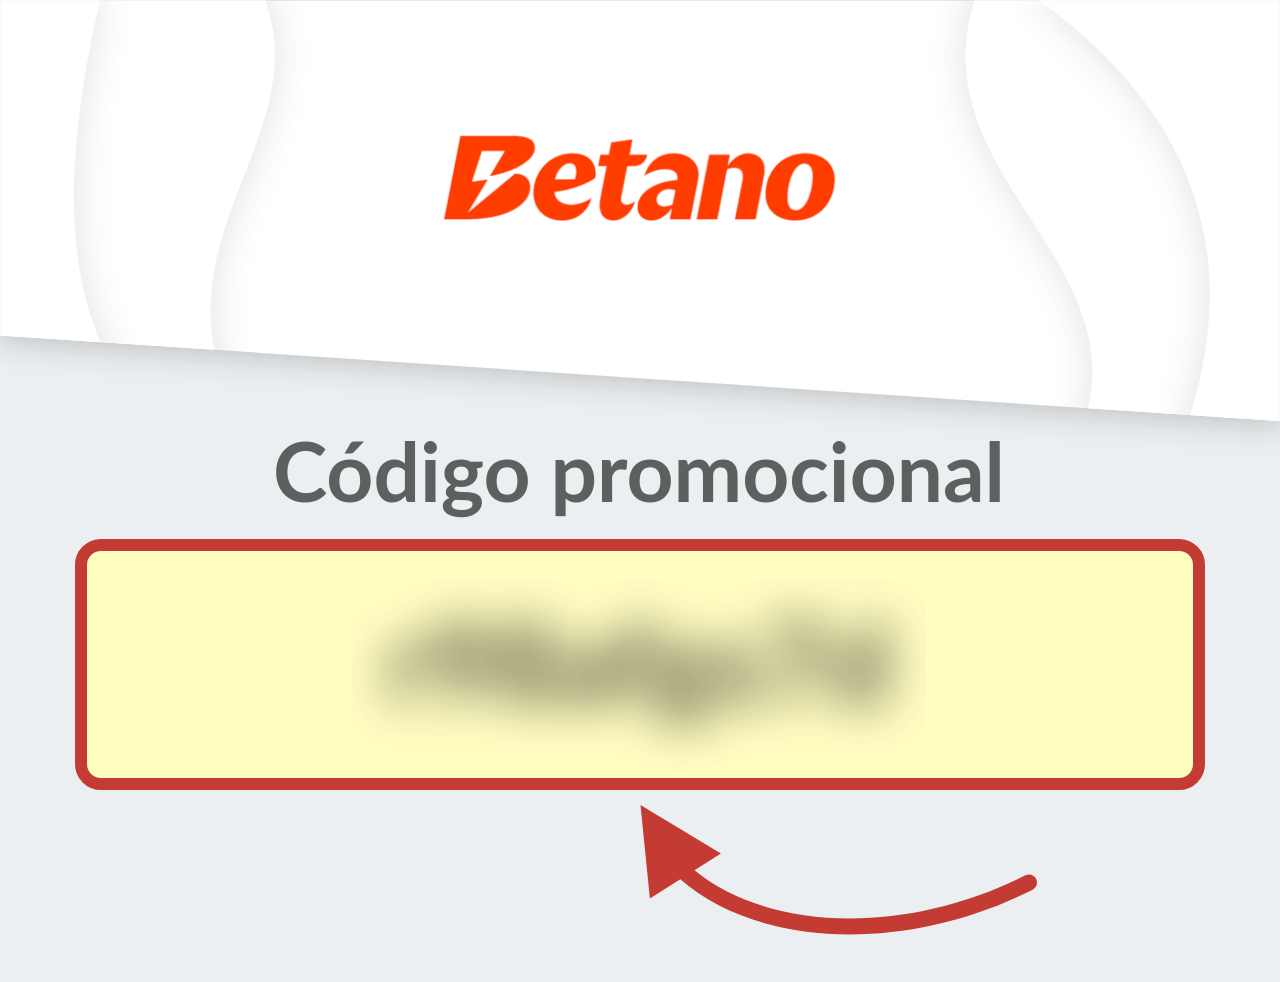 Código promocional Betano: Use TIMAOBET